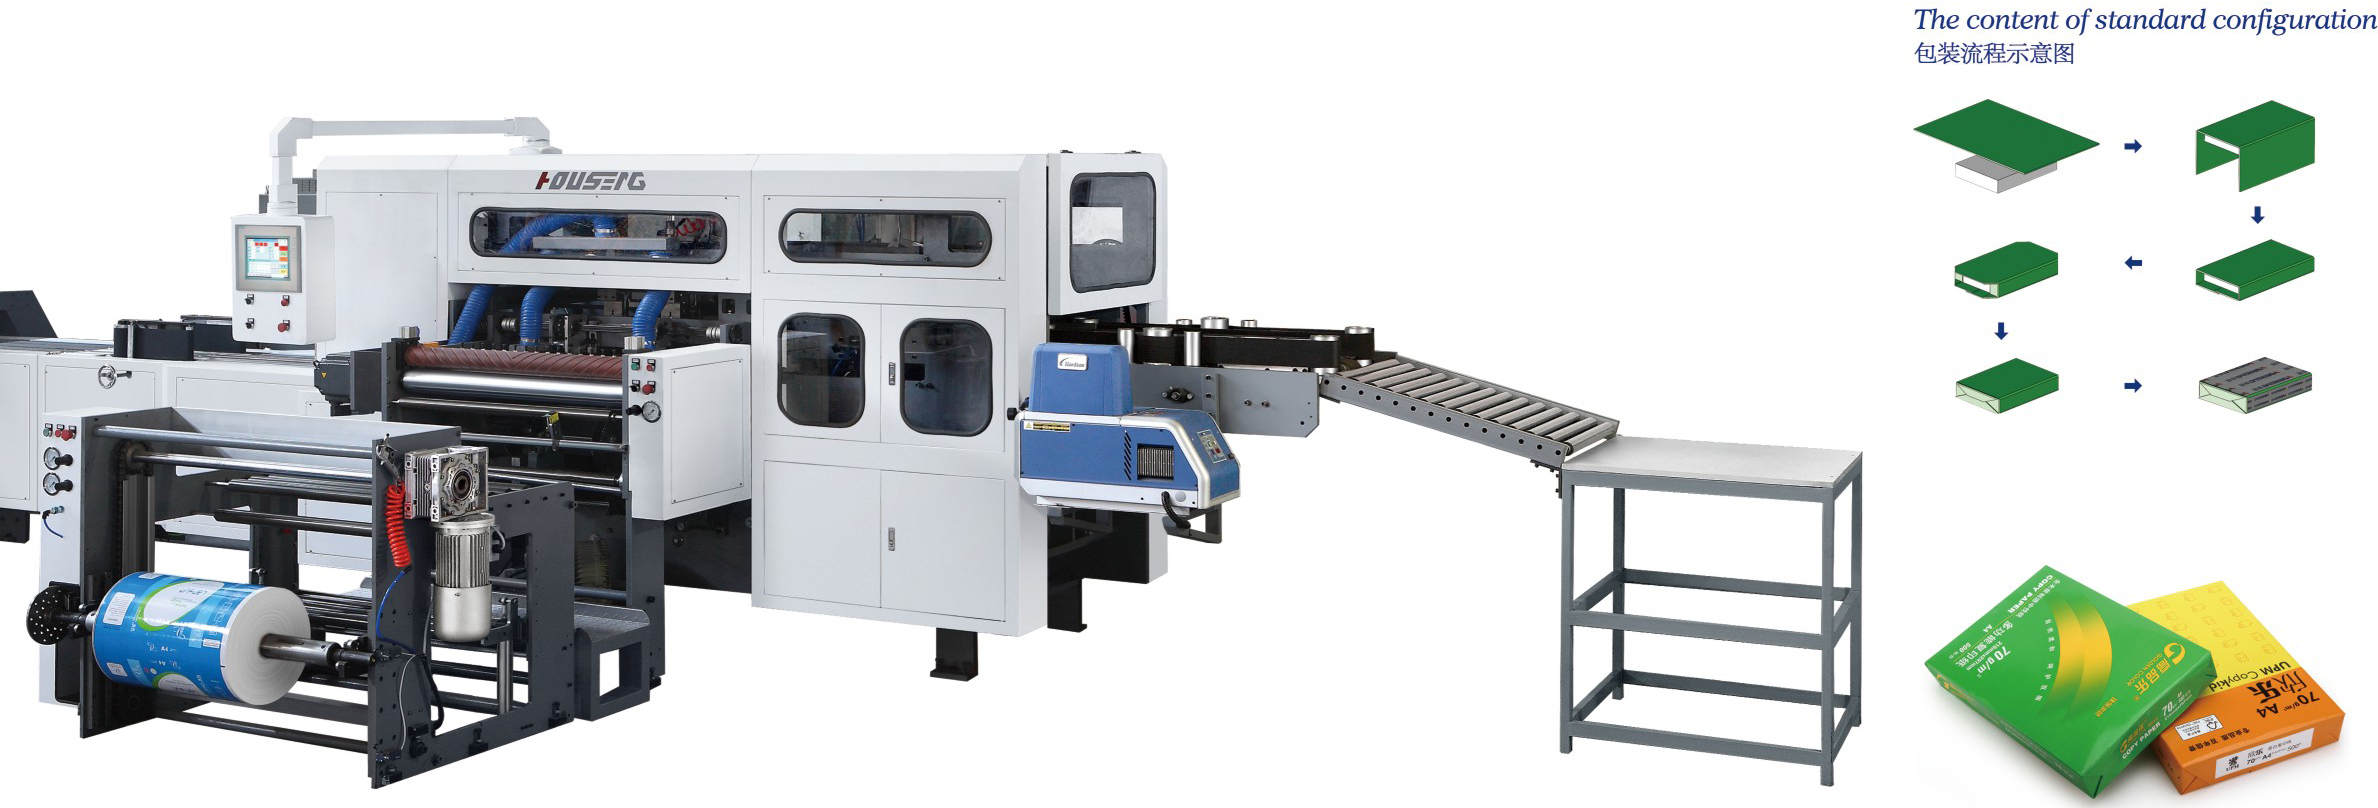 VGP-A4 297 x 210mm 高速复印纸包装机